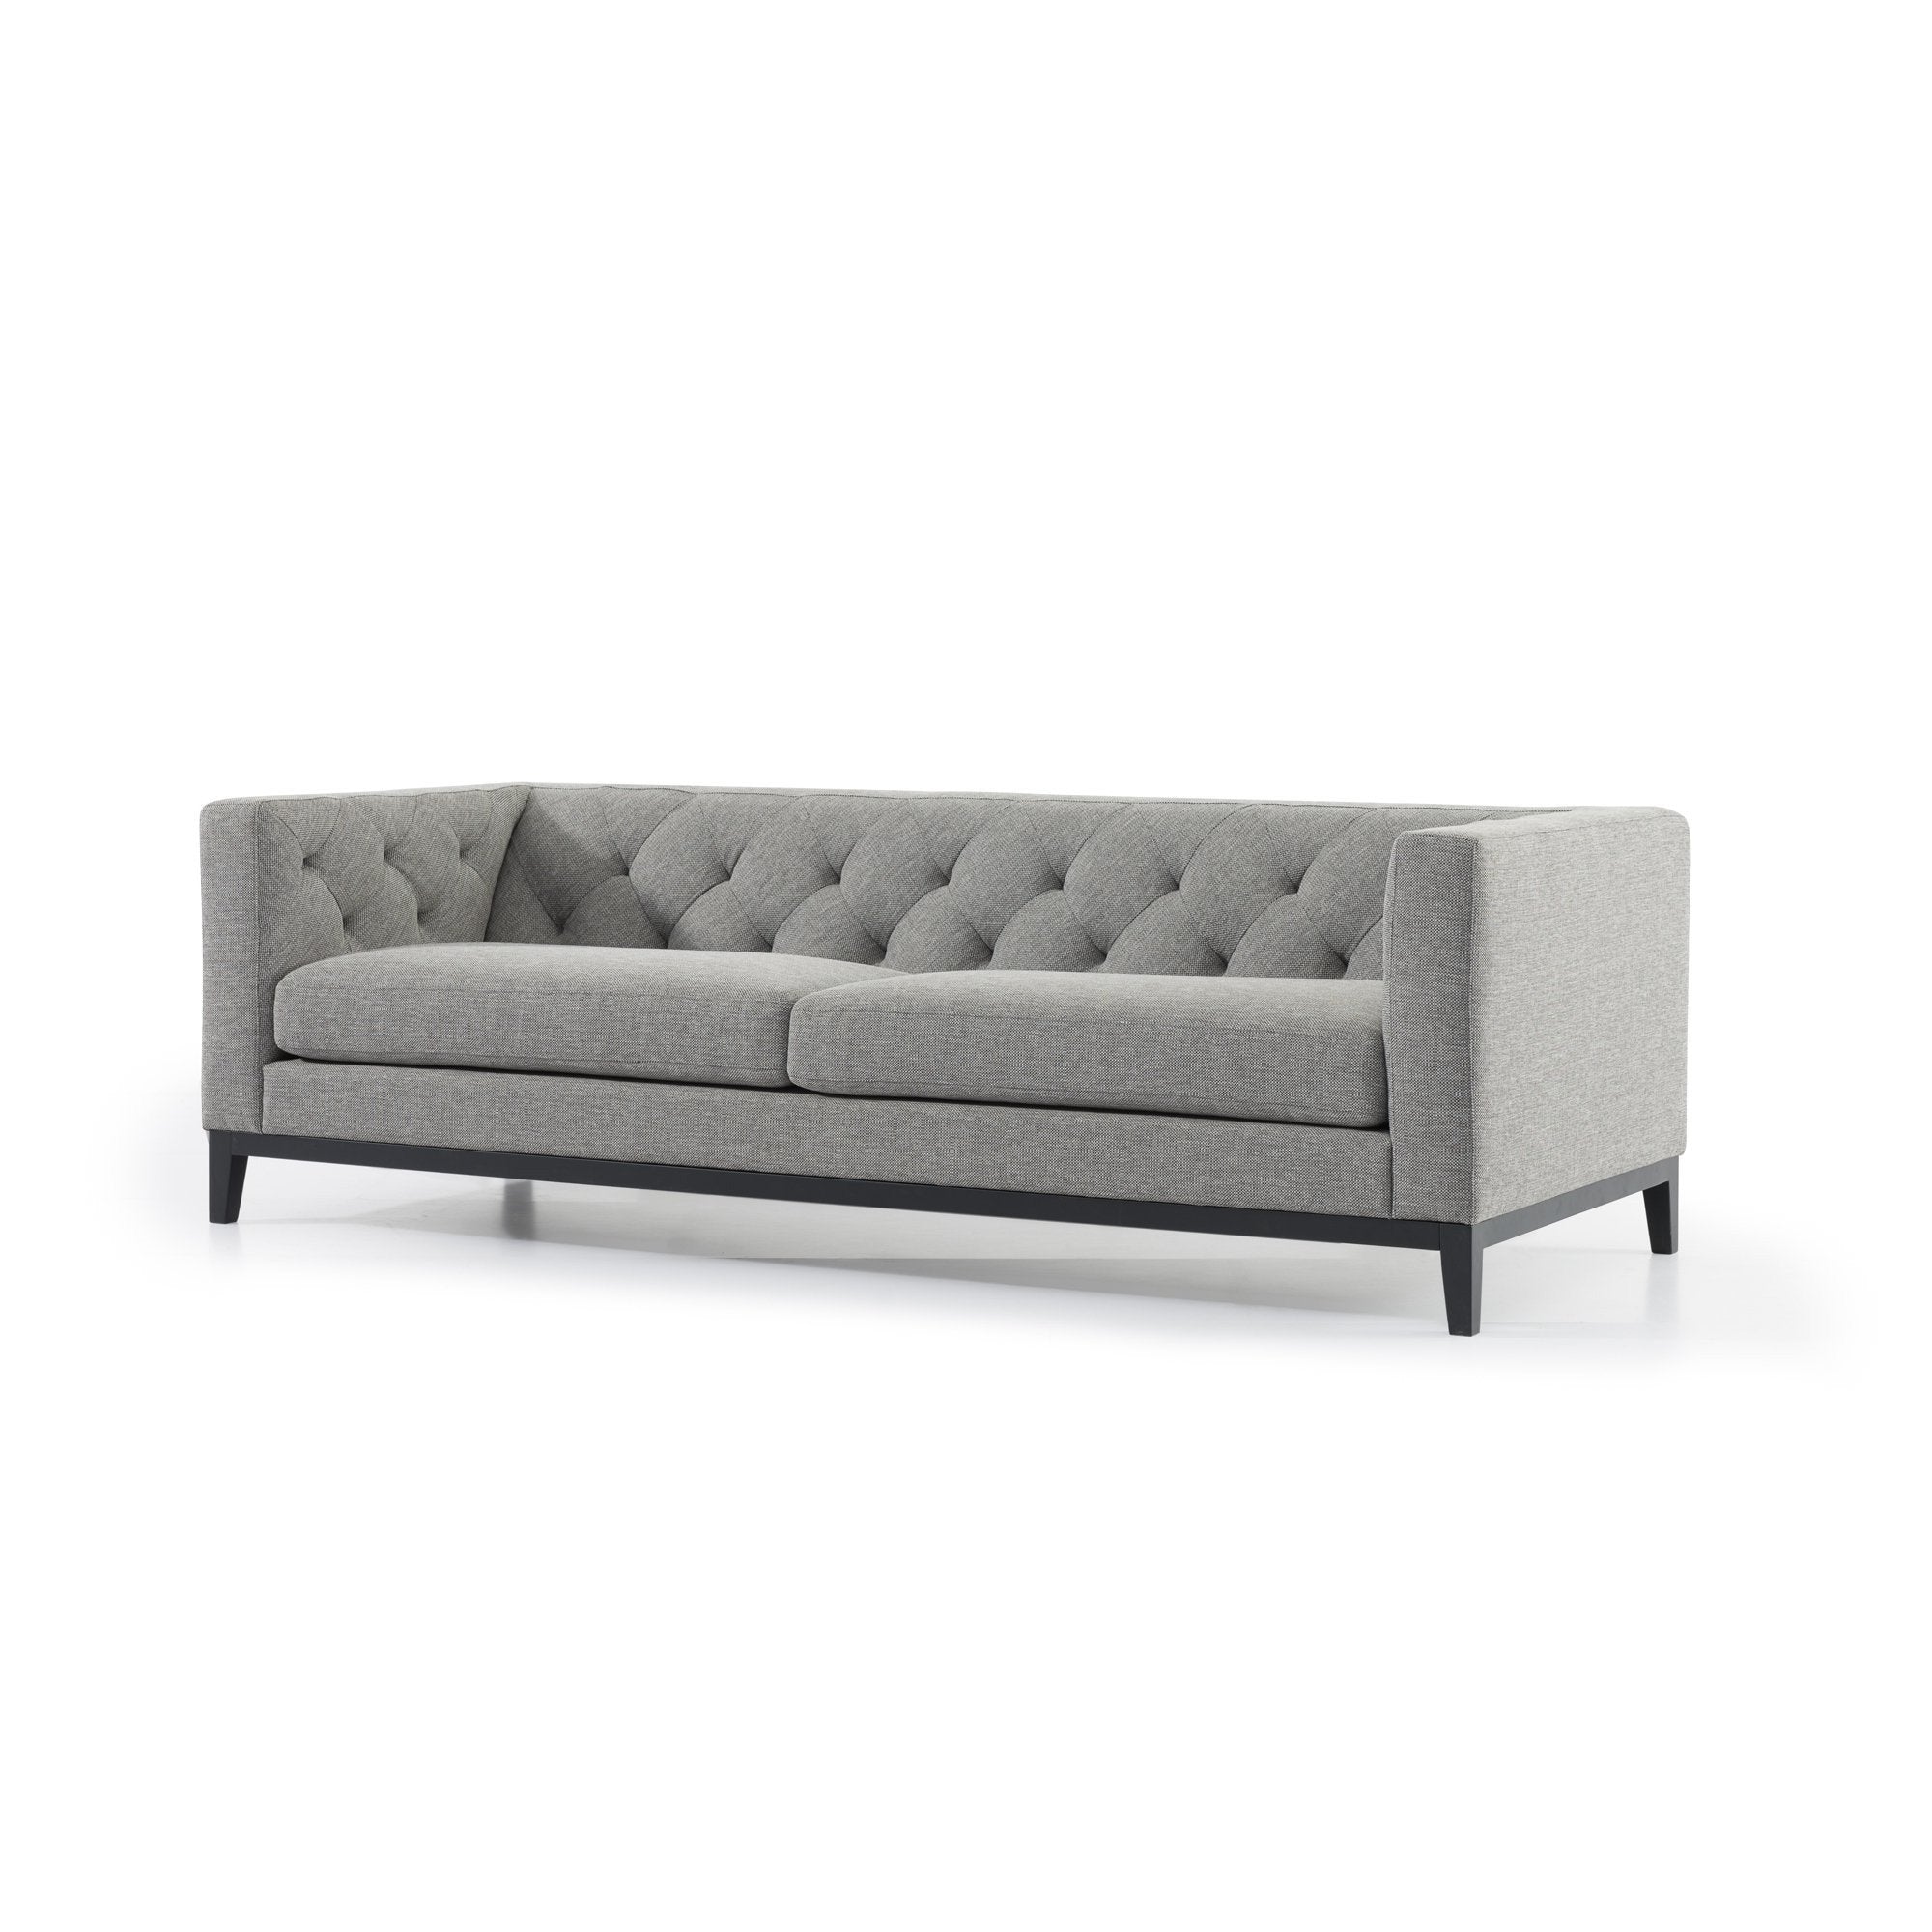 Ava 3 Seater Sofa - Graphite Grey Fabric with Black Base